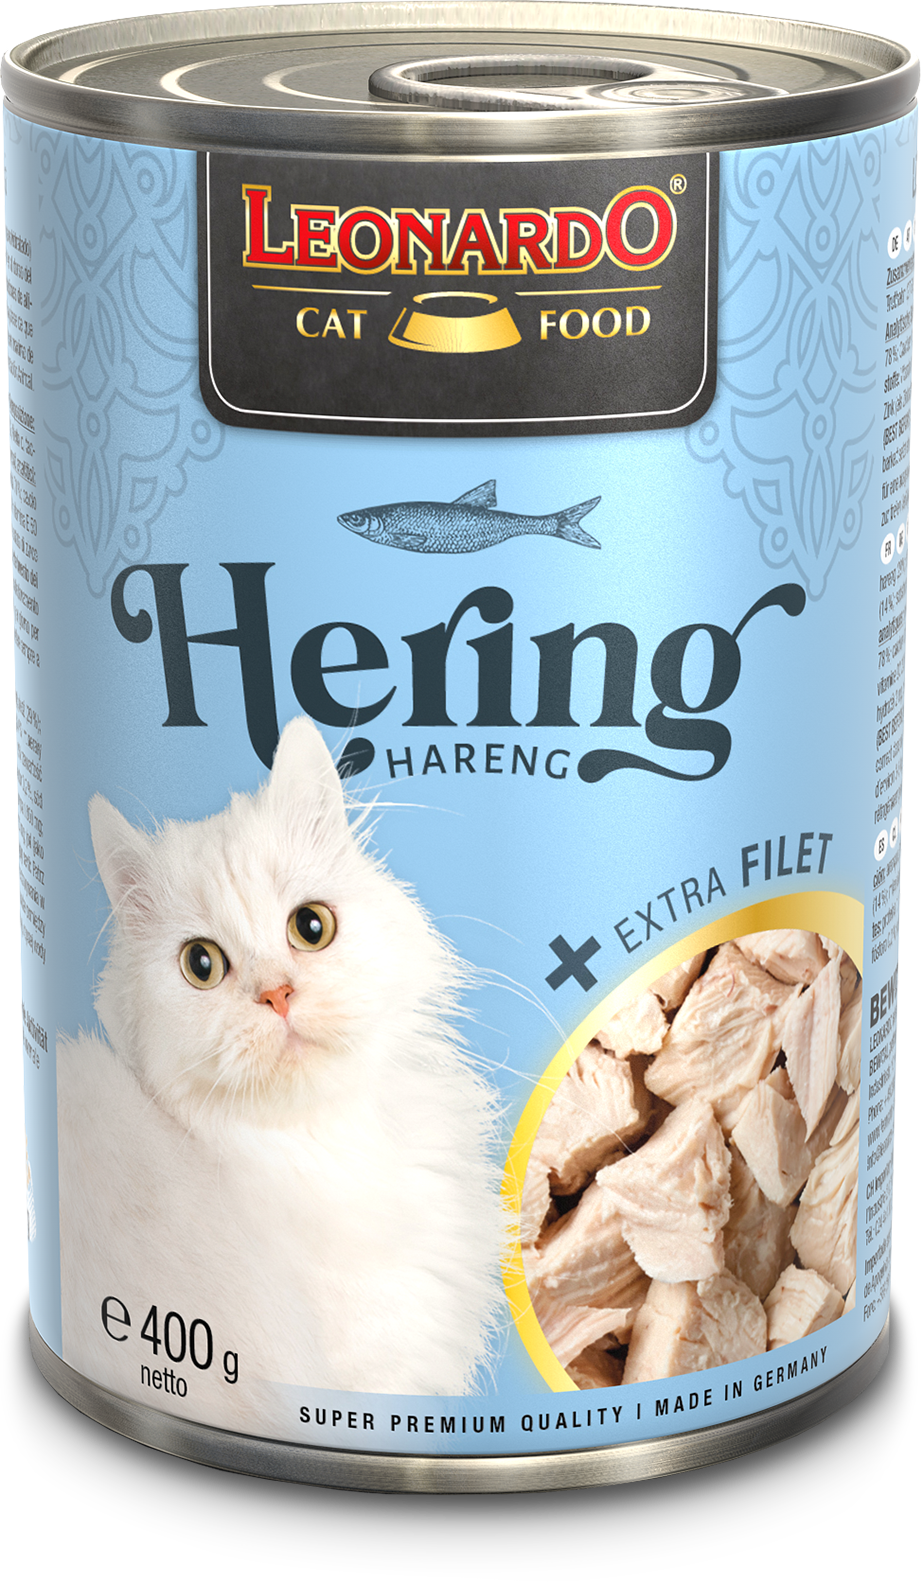 Image of the LEONARDO herring + extra filet can.